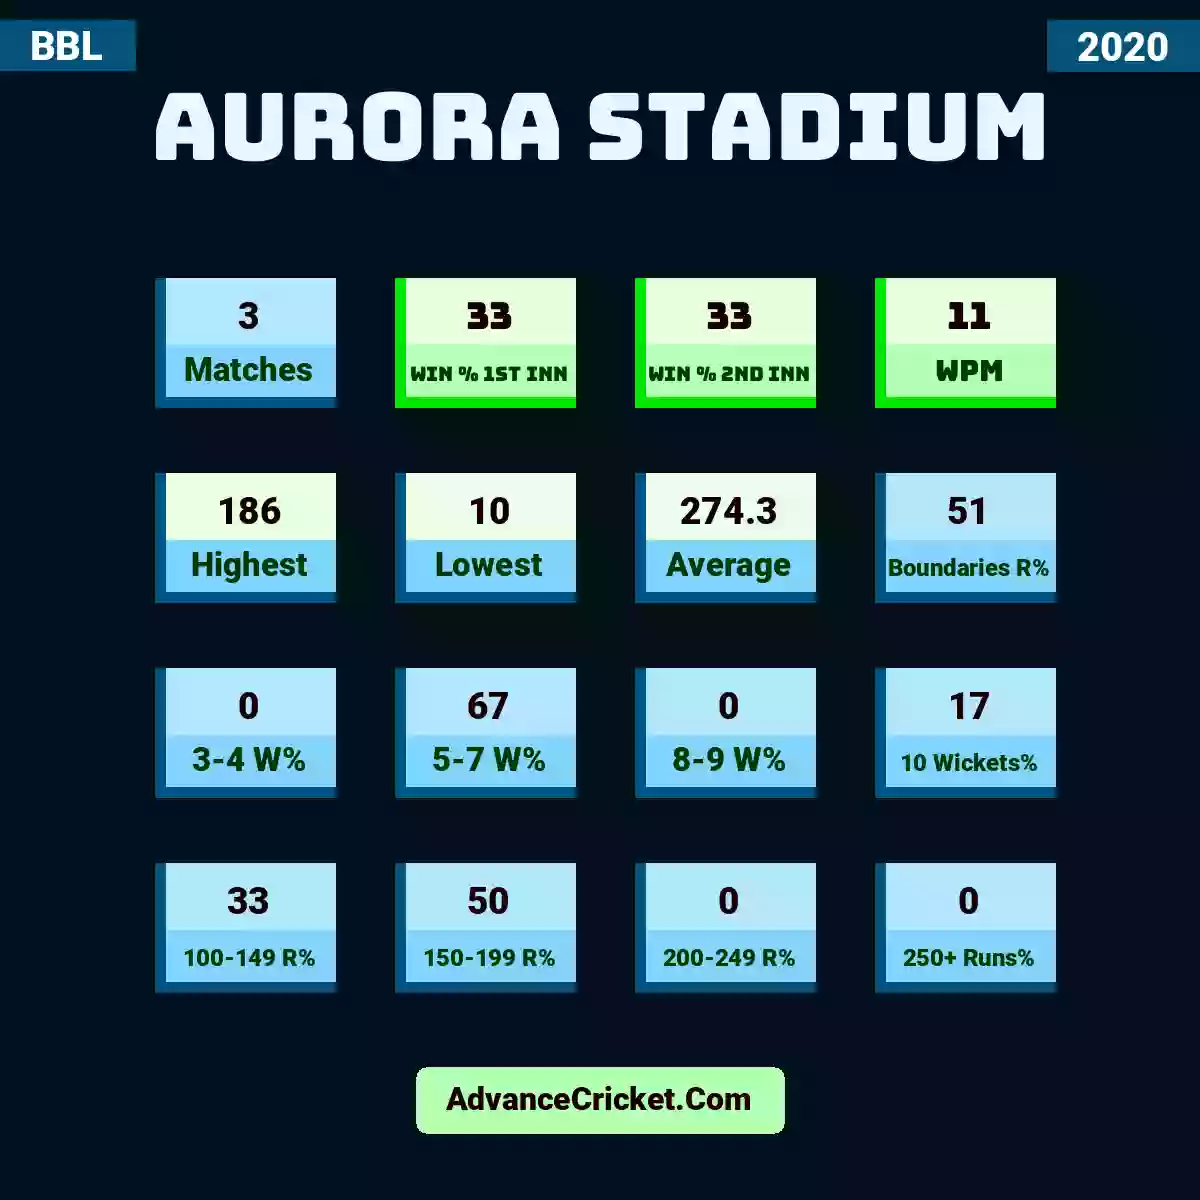 Image showing Aurora Stadium with Matches: 3, Win % 1st Inn: 33, Win % 2nd Inn: 33, WPM: 11, Highest: 186, Lowest: 10, Average: 274.3, Boundaries R%: 51, 3-4 W%: 0, 5-7 W%: 67, 8-9 W%: 0, 10 Wickets%: 17, 100-149 R%: 33, 150-199 R%: 50, 200-249 R%: 0, 250+ Runs%: 0.